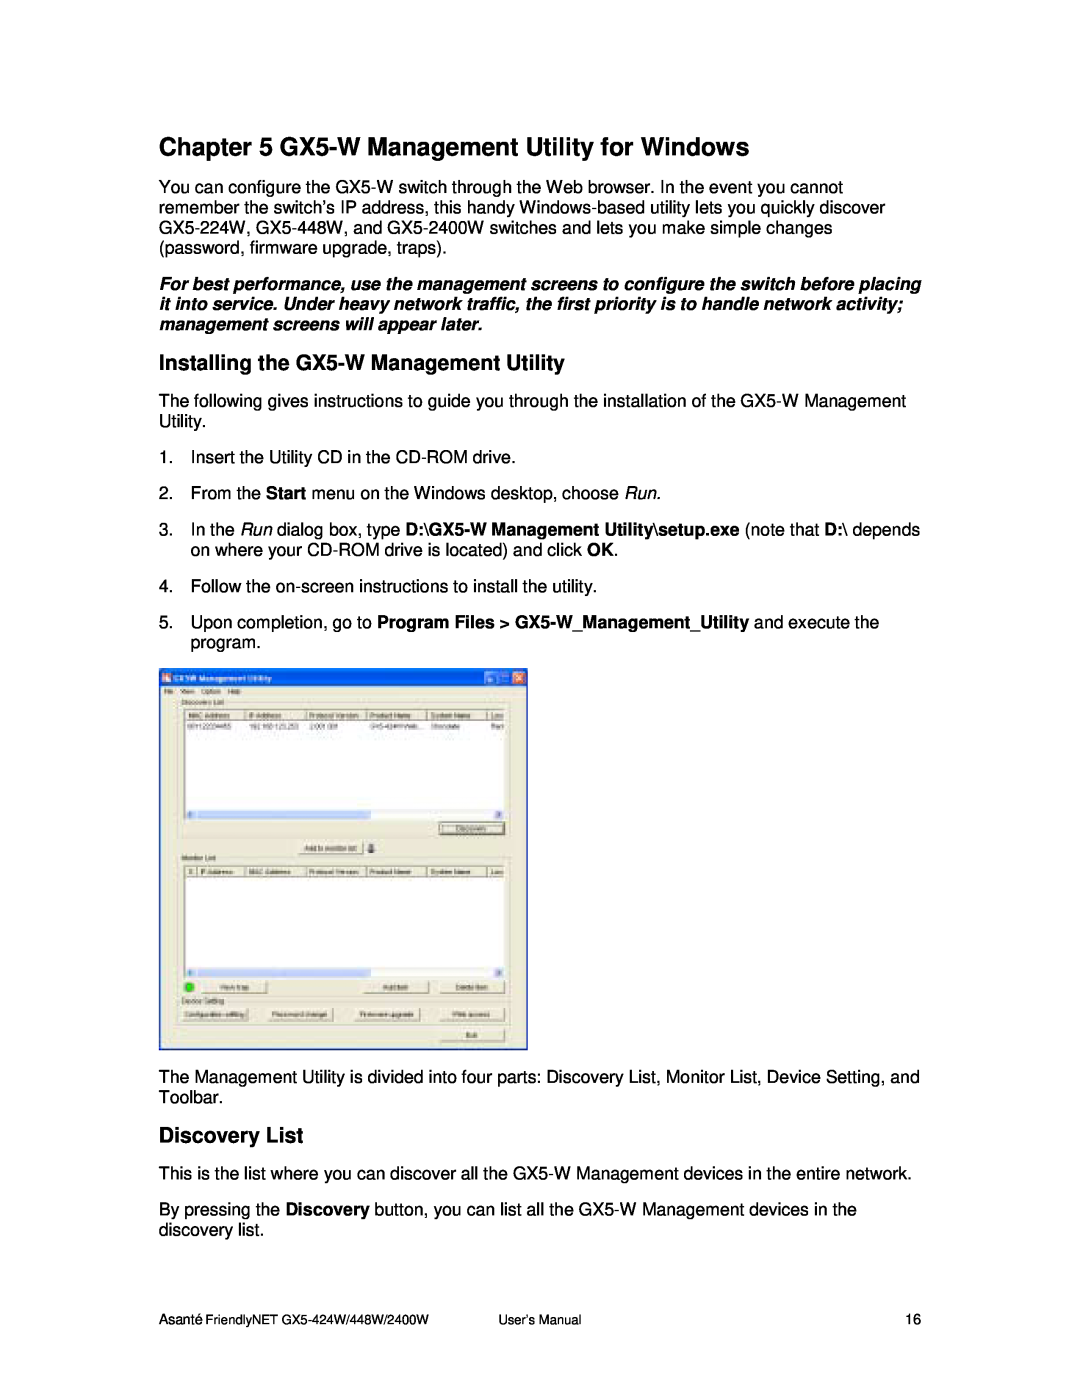 Asante Technologies GX5-424W GX5-W Management Utility for Windows, Installing the GX5-W Management Utility, Discovery List 